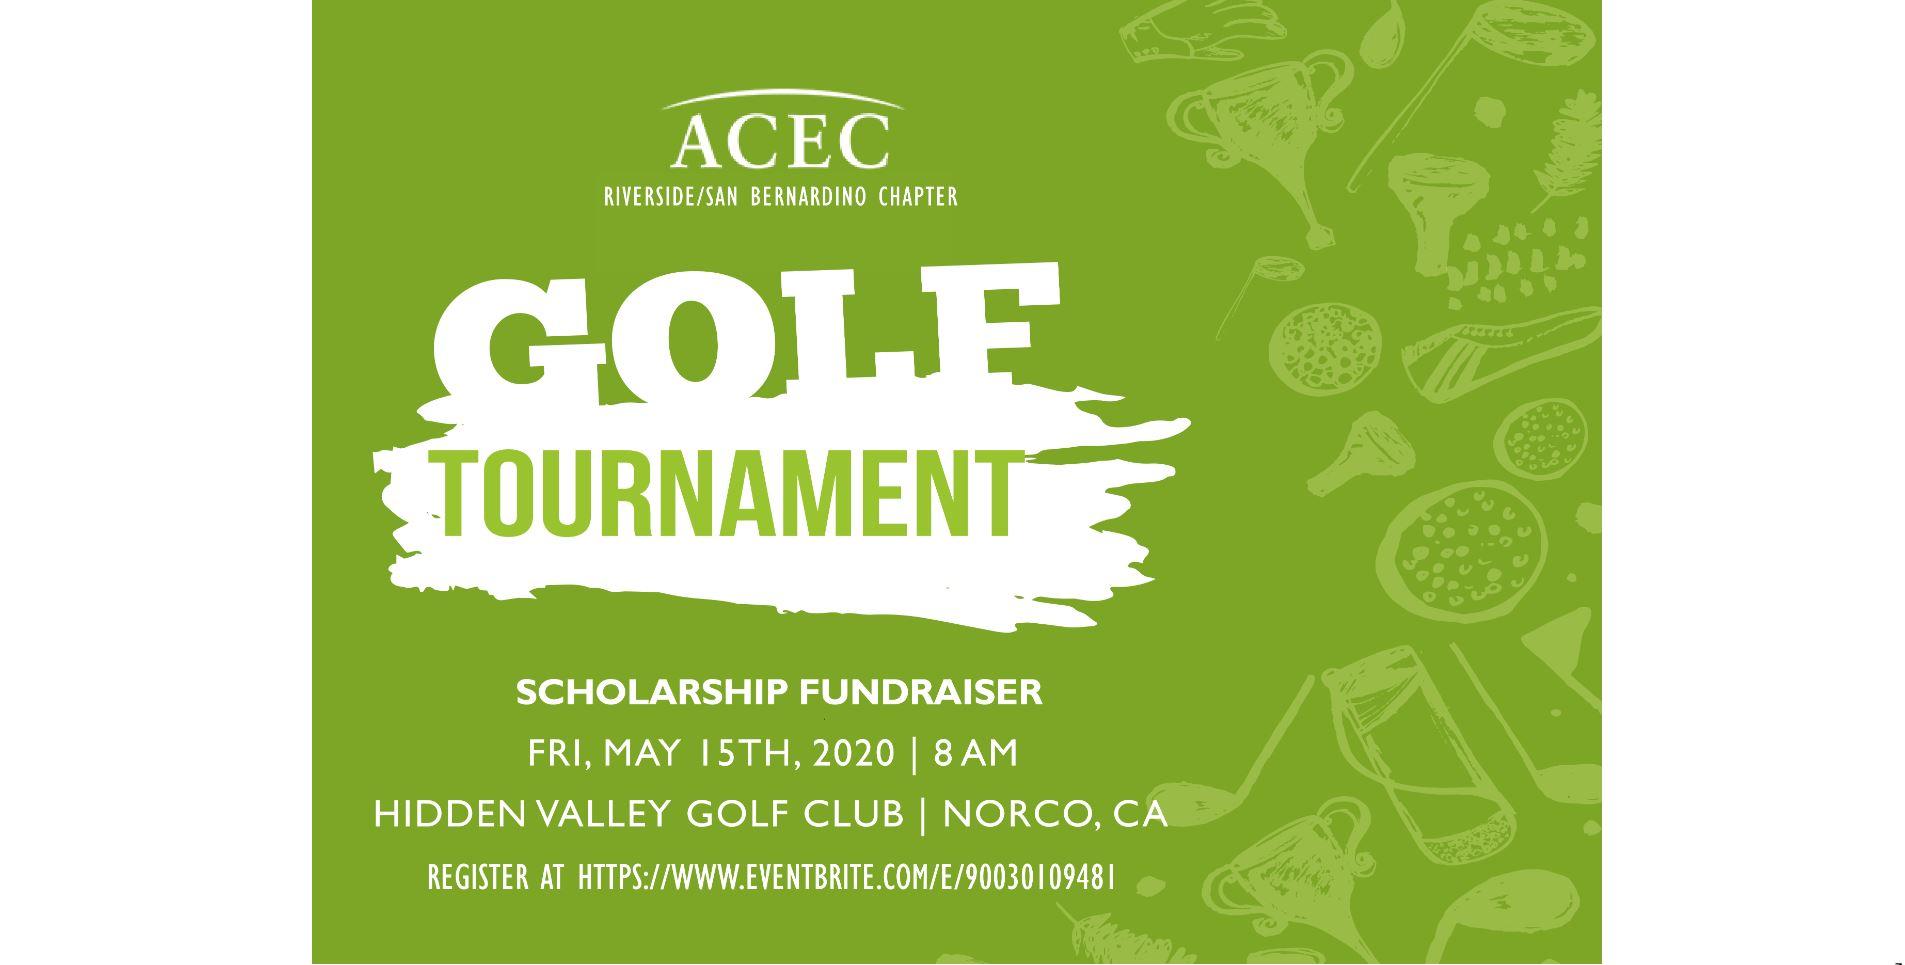 ACEC Riverside/San Bernardino Scholarship Golf Tournament, Friday May 15